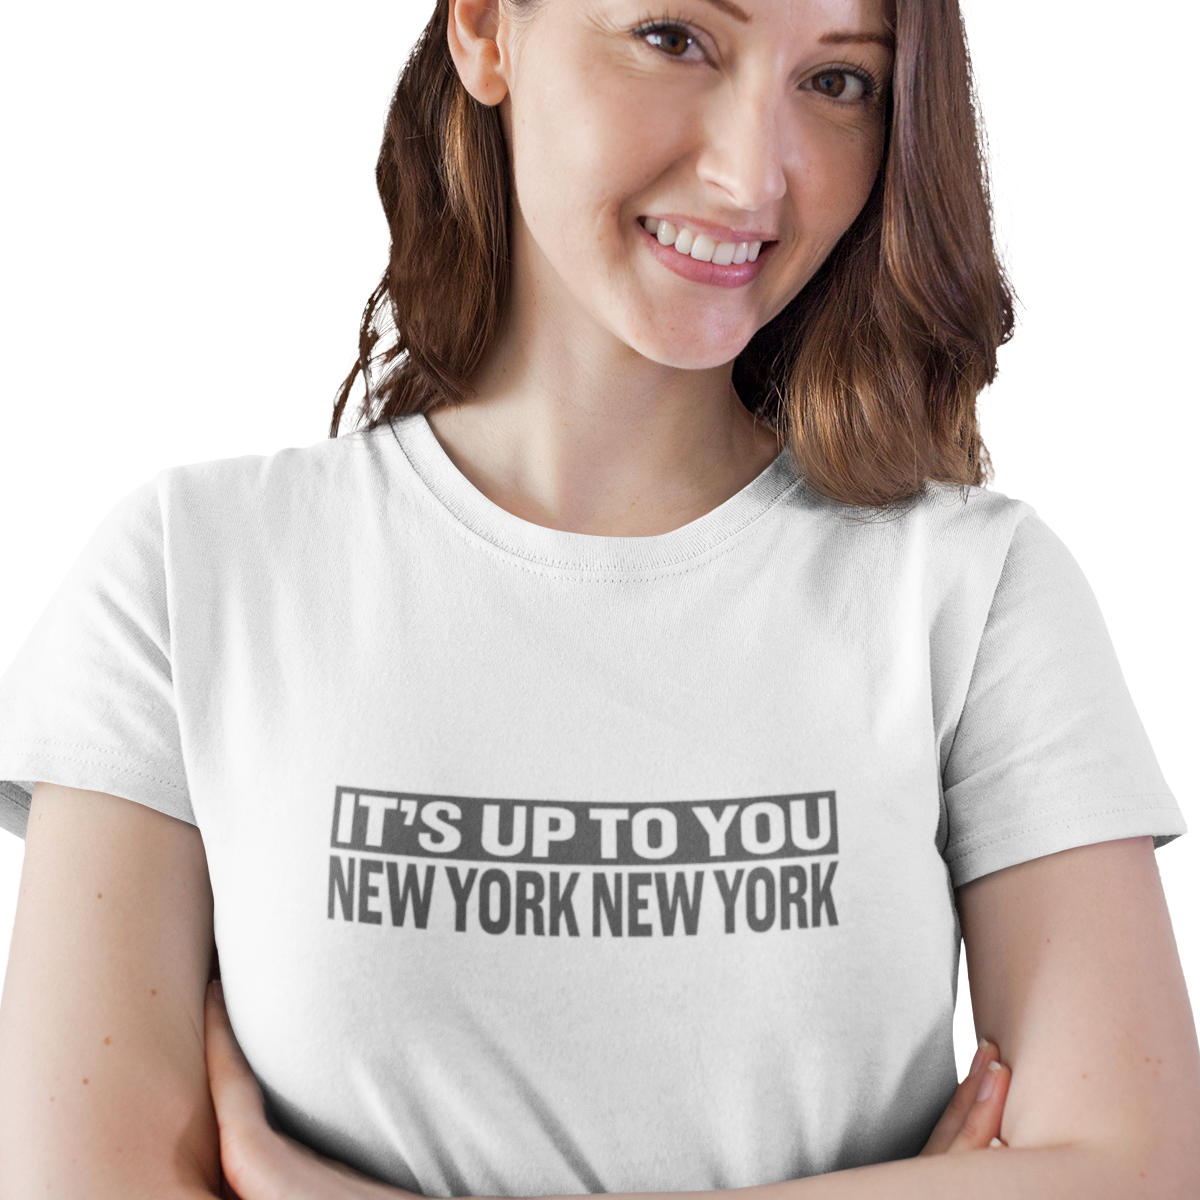 New York City t shirt